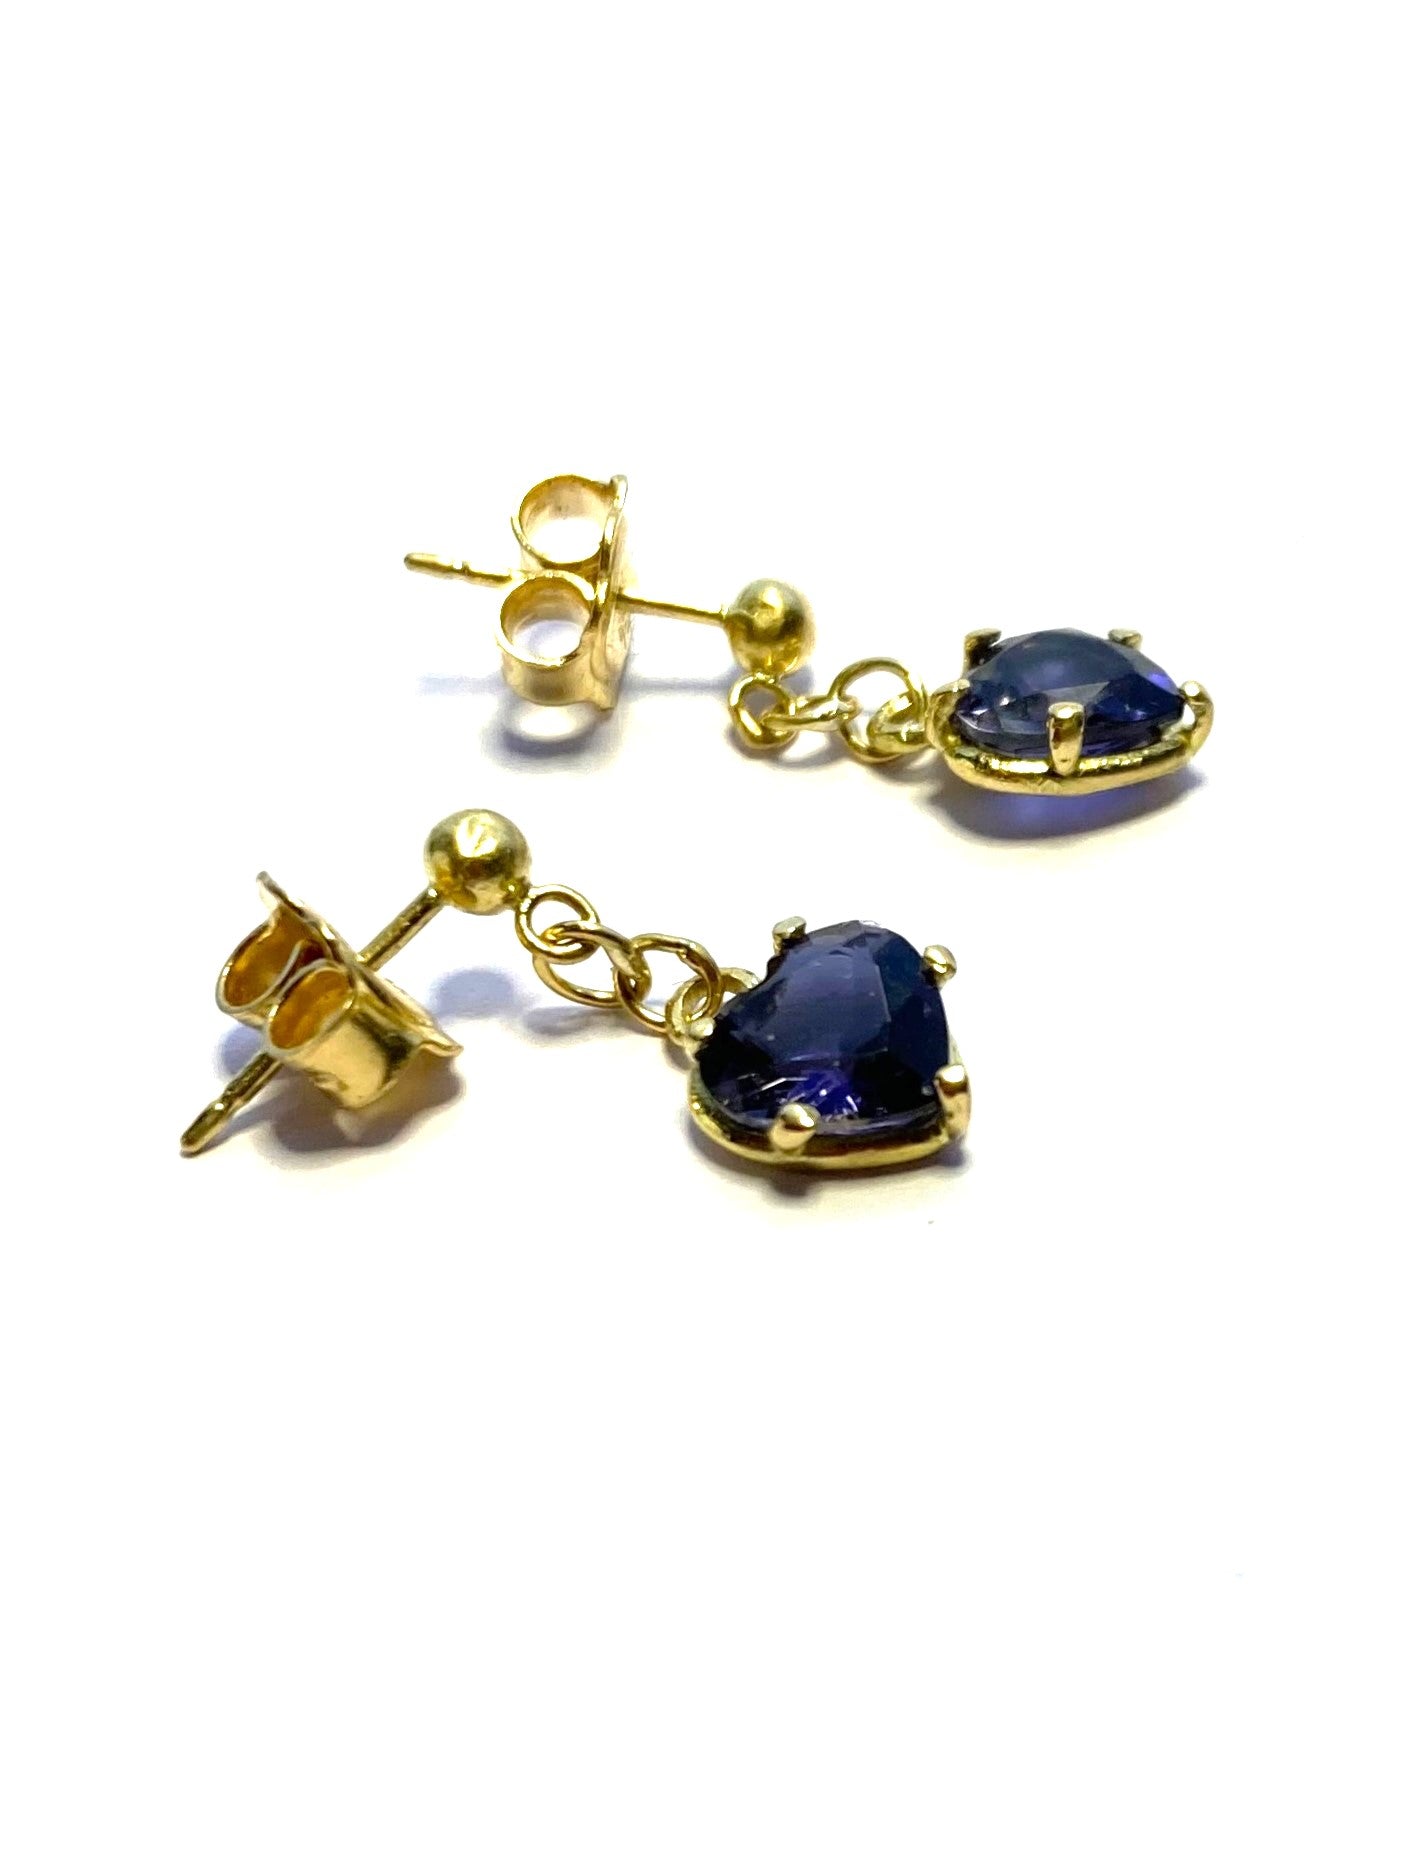 Stunning 18ct yellow gold Iolite Heart Stud Drop Earrings